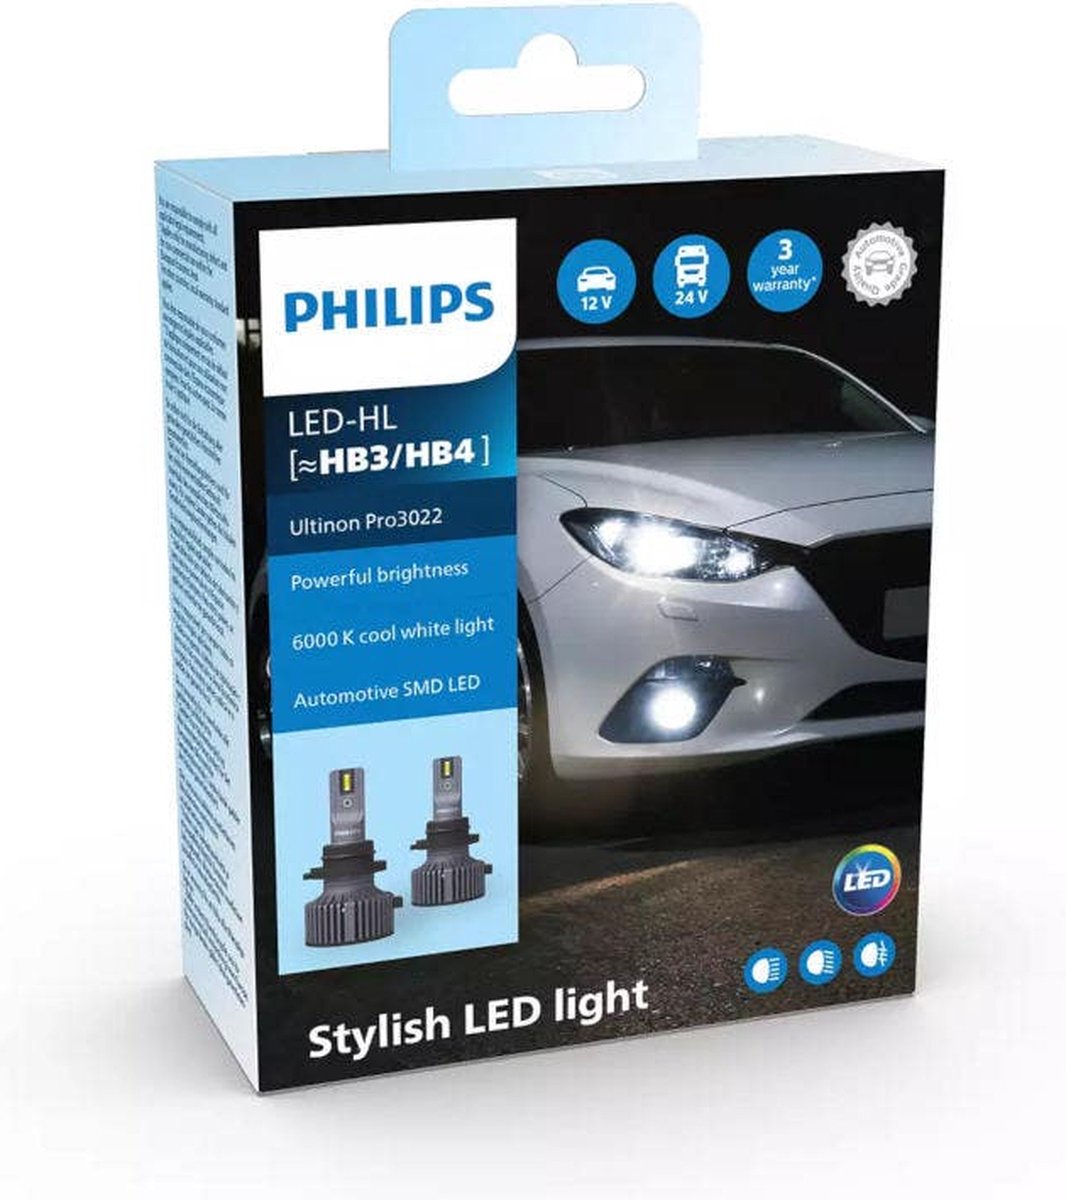 Philips Ultinon Pro3022 LED-HL HB3 HB4 set LUM11005U3022X2